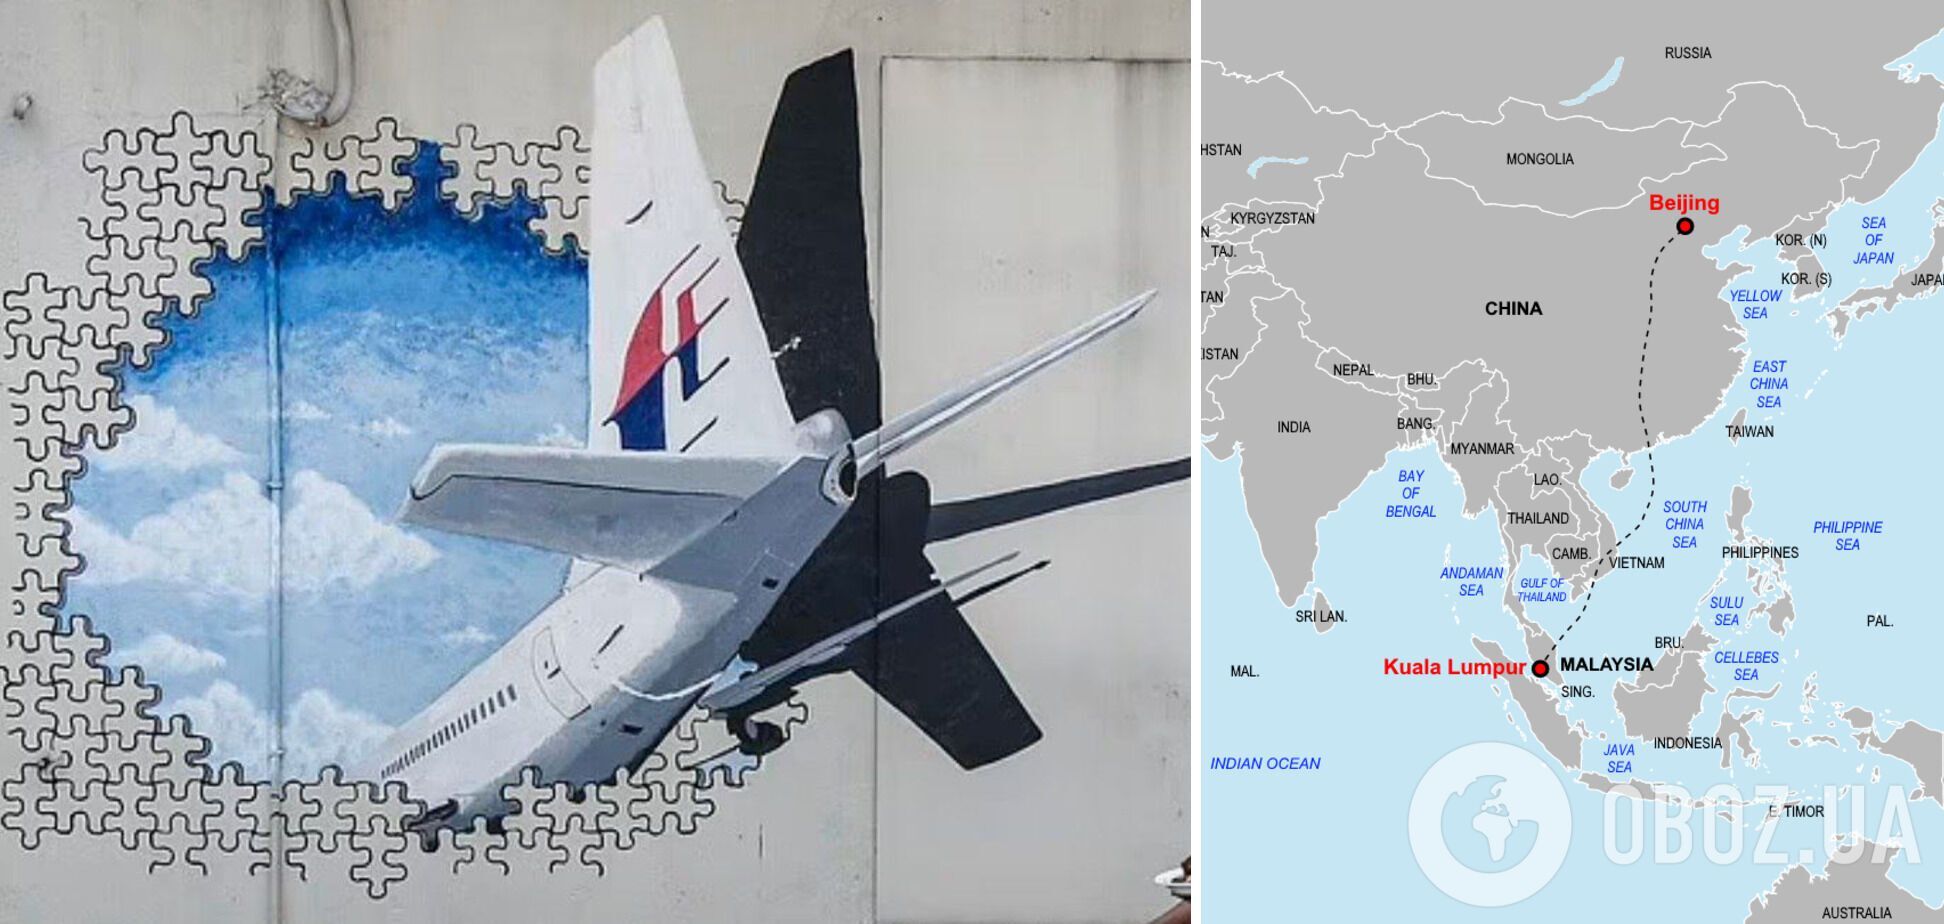 8 марта 2014 года пропал самолет Boeing 777-200ER рейса MH370